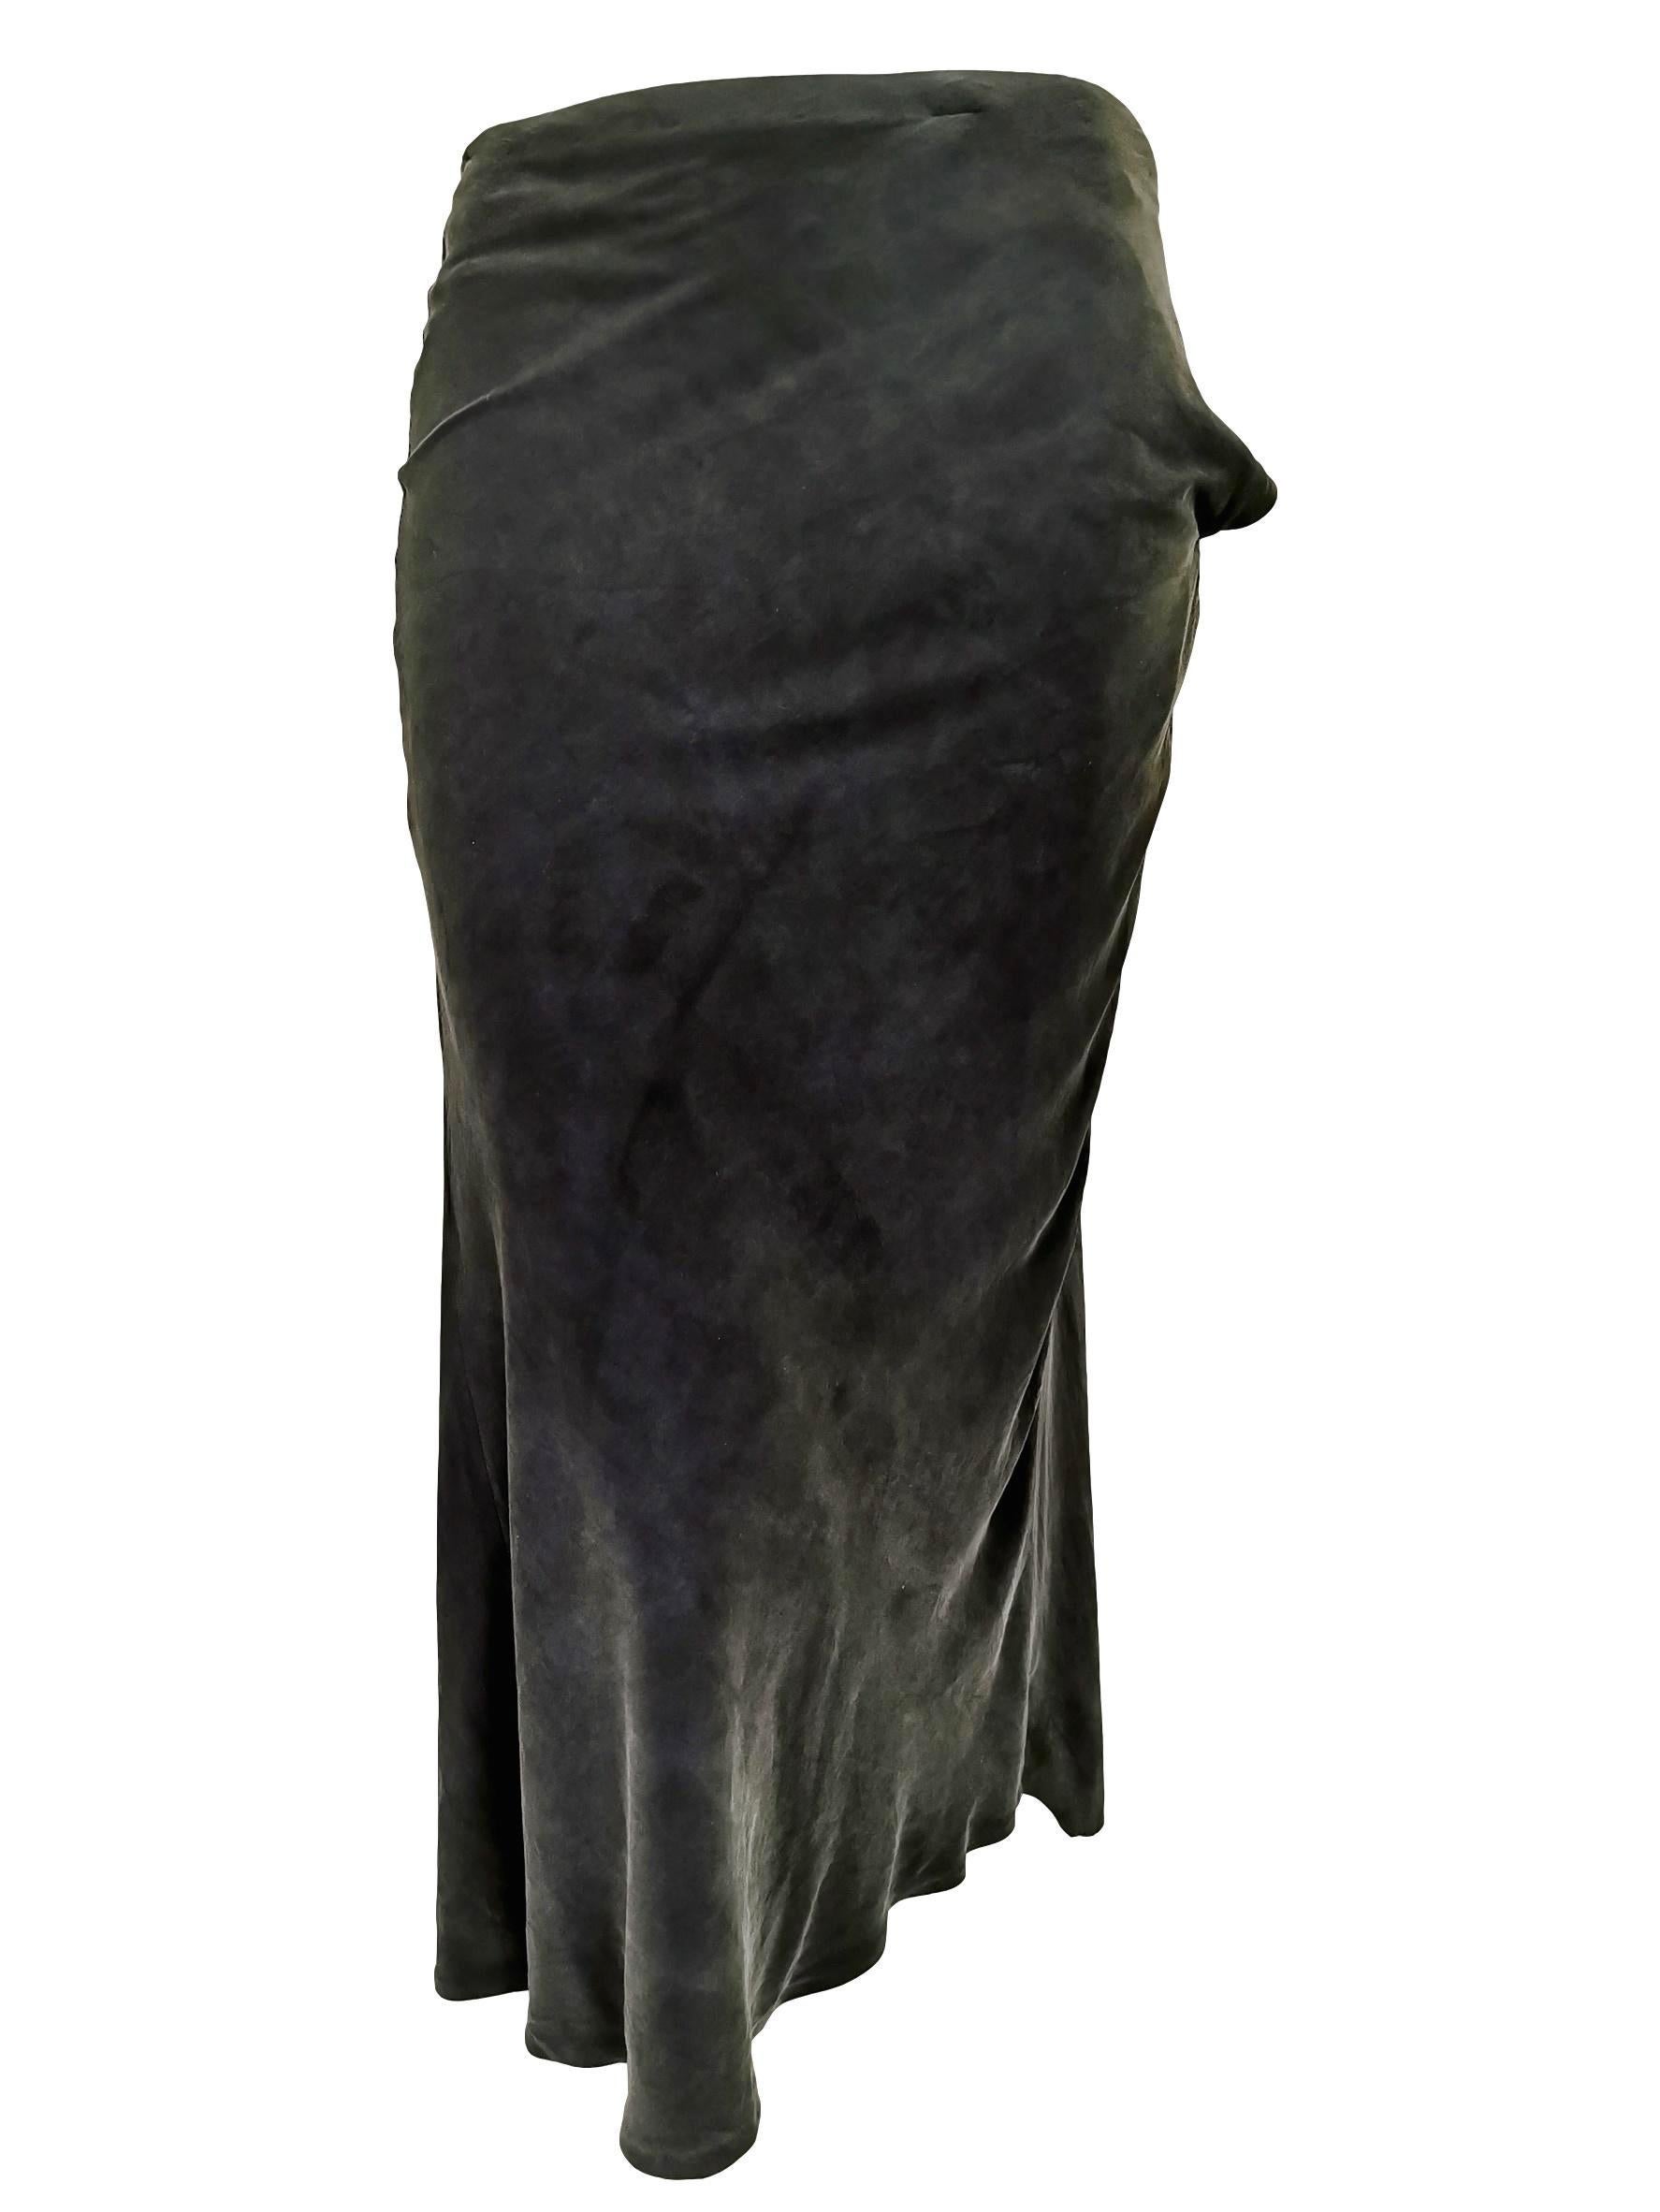 Yohji Yamamoto
Scallop Hem Skirt
100% Silk
Size 1